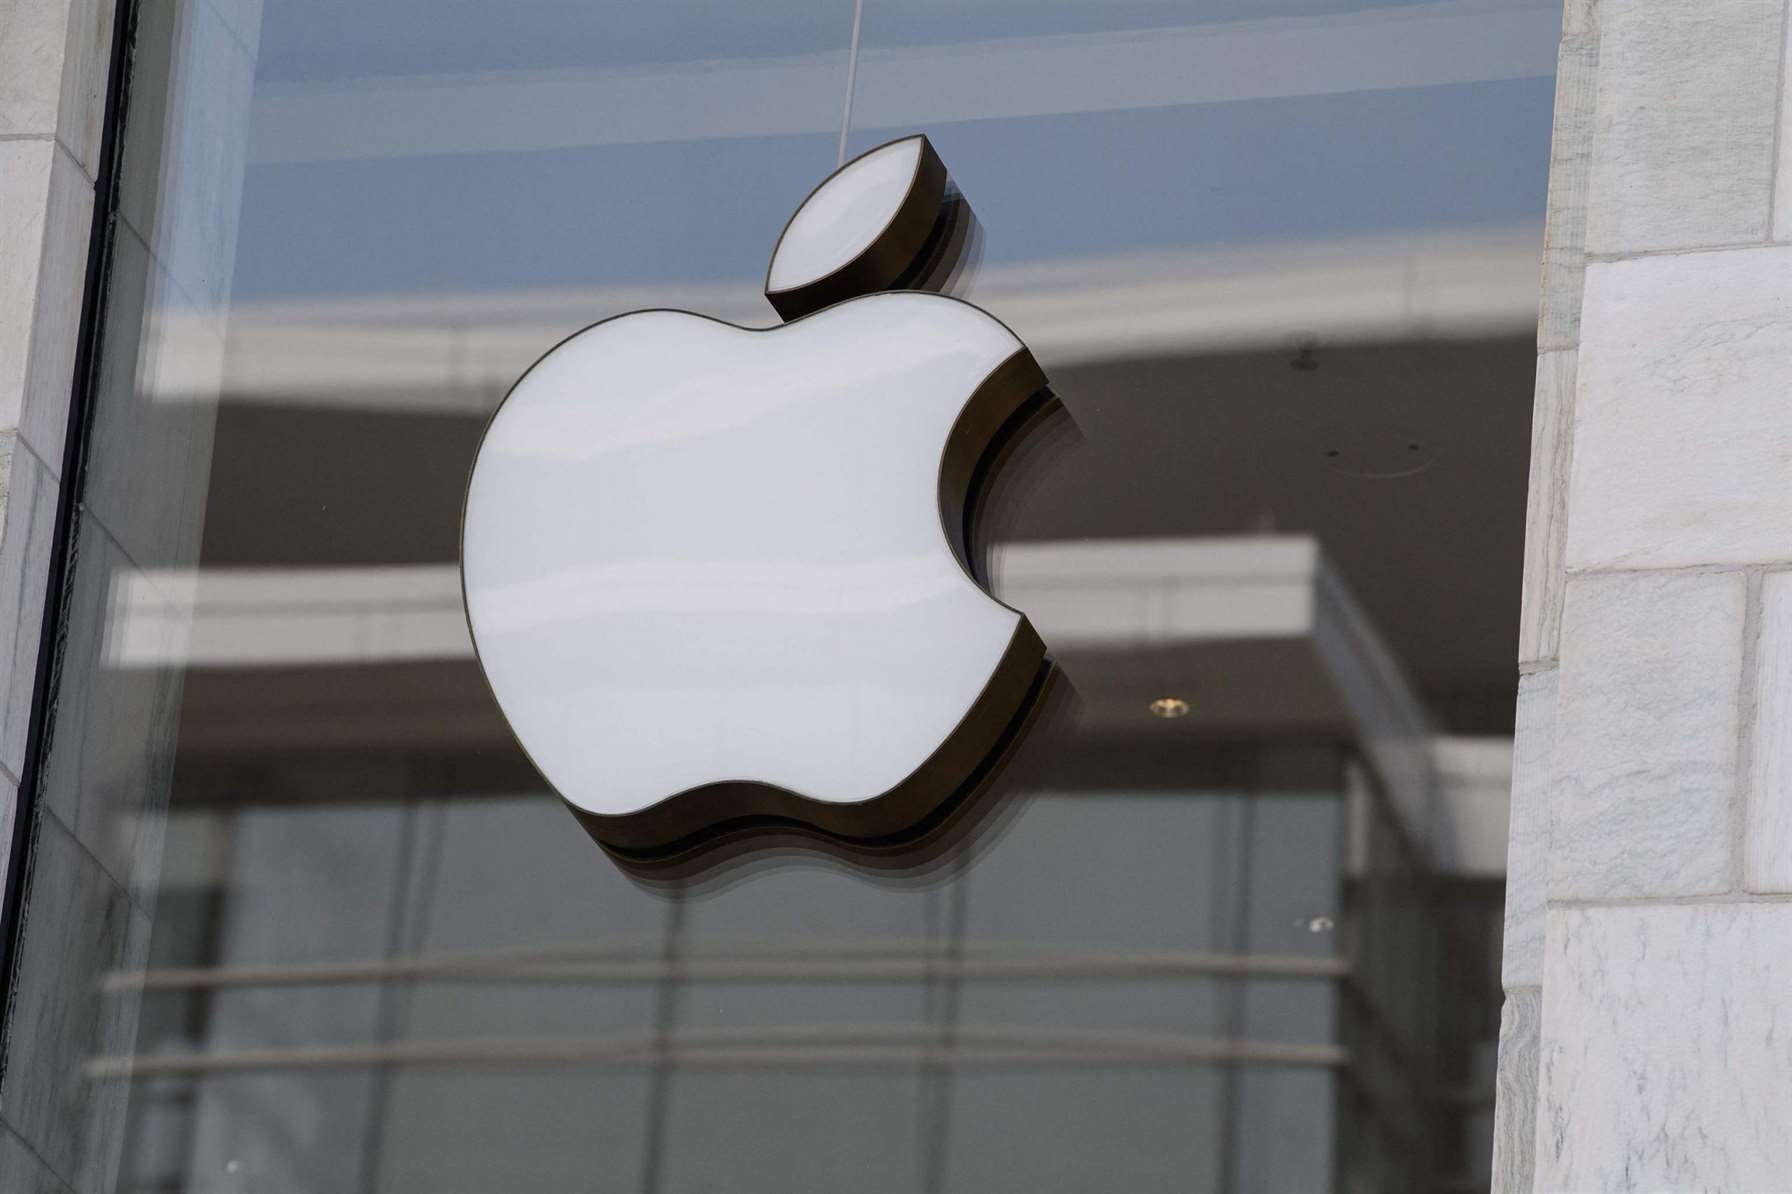 ФАС оштрафовал Apple на 1 миллиард рублей за бан российских приложений